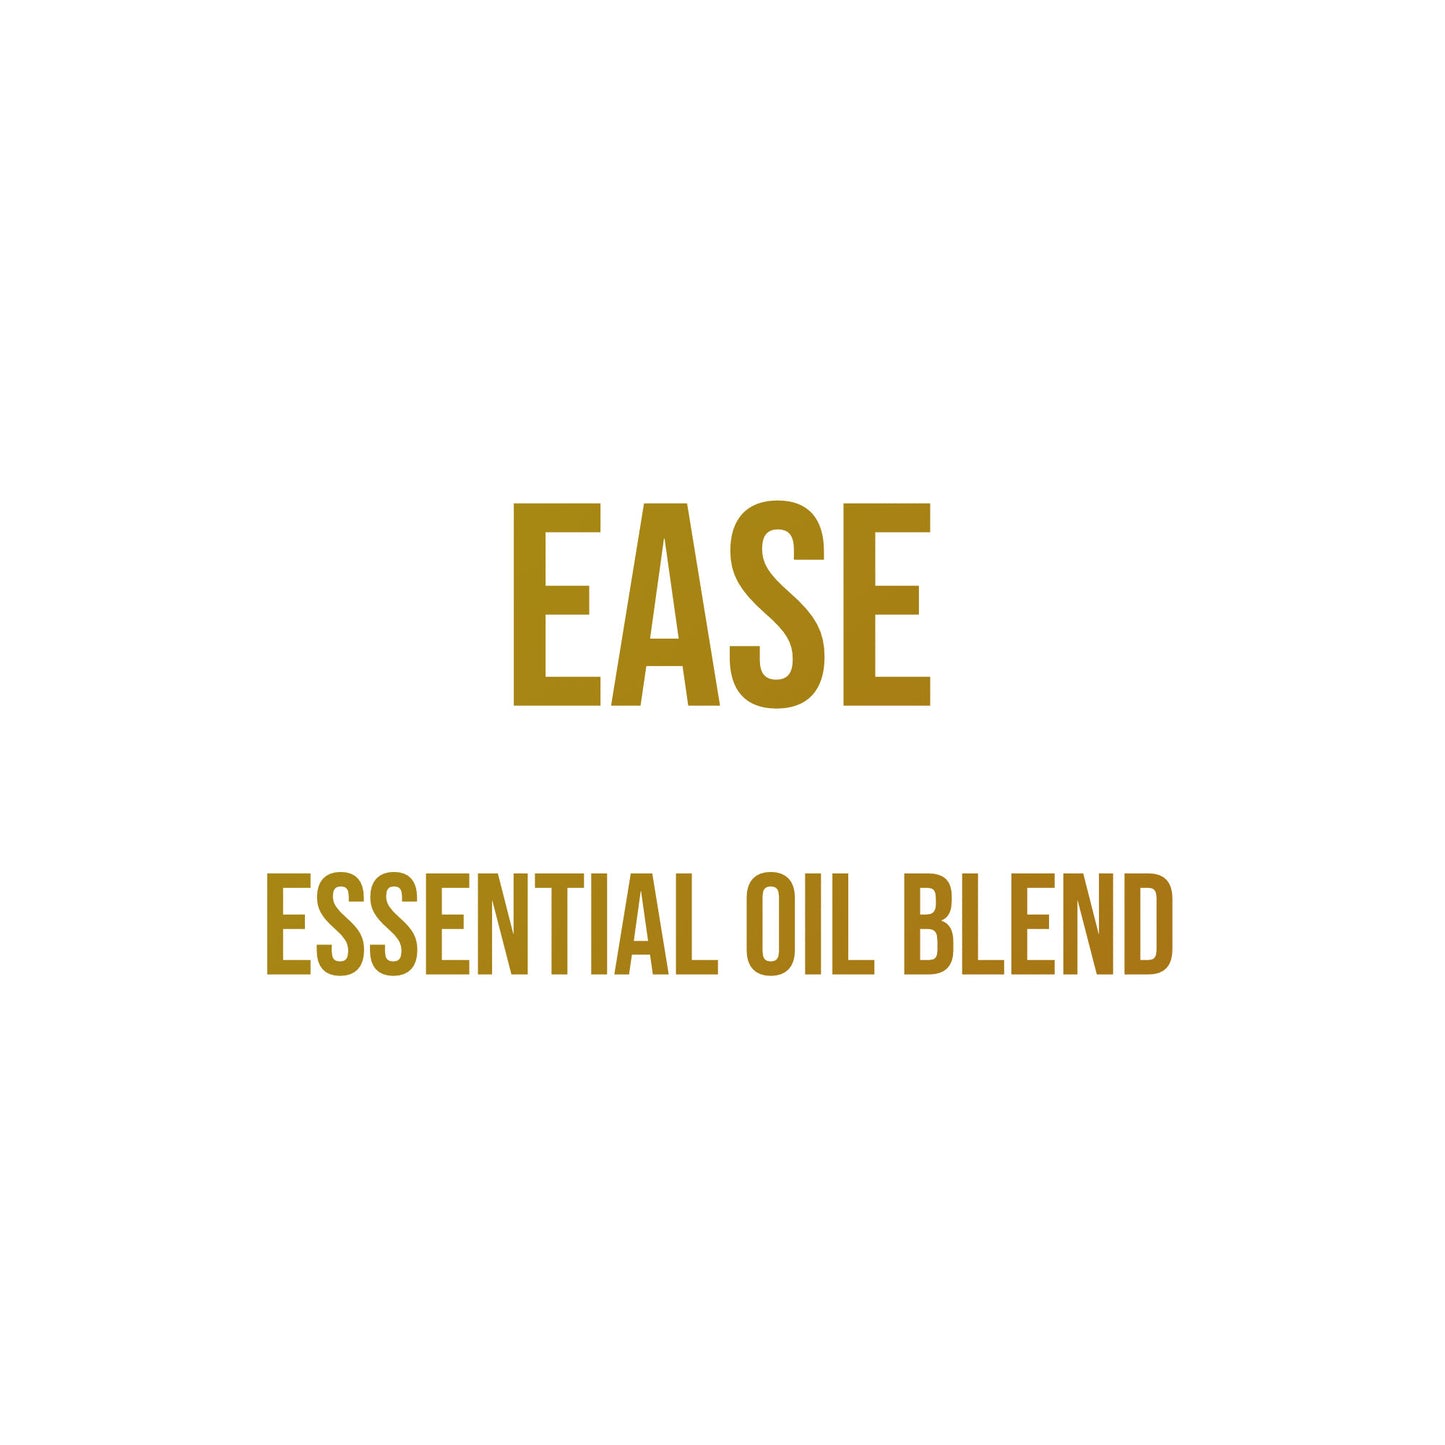 Ease Essential Oil Blend